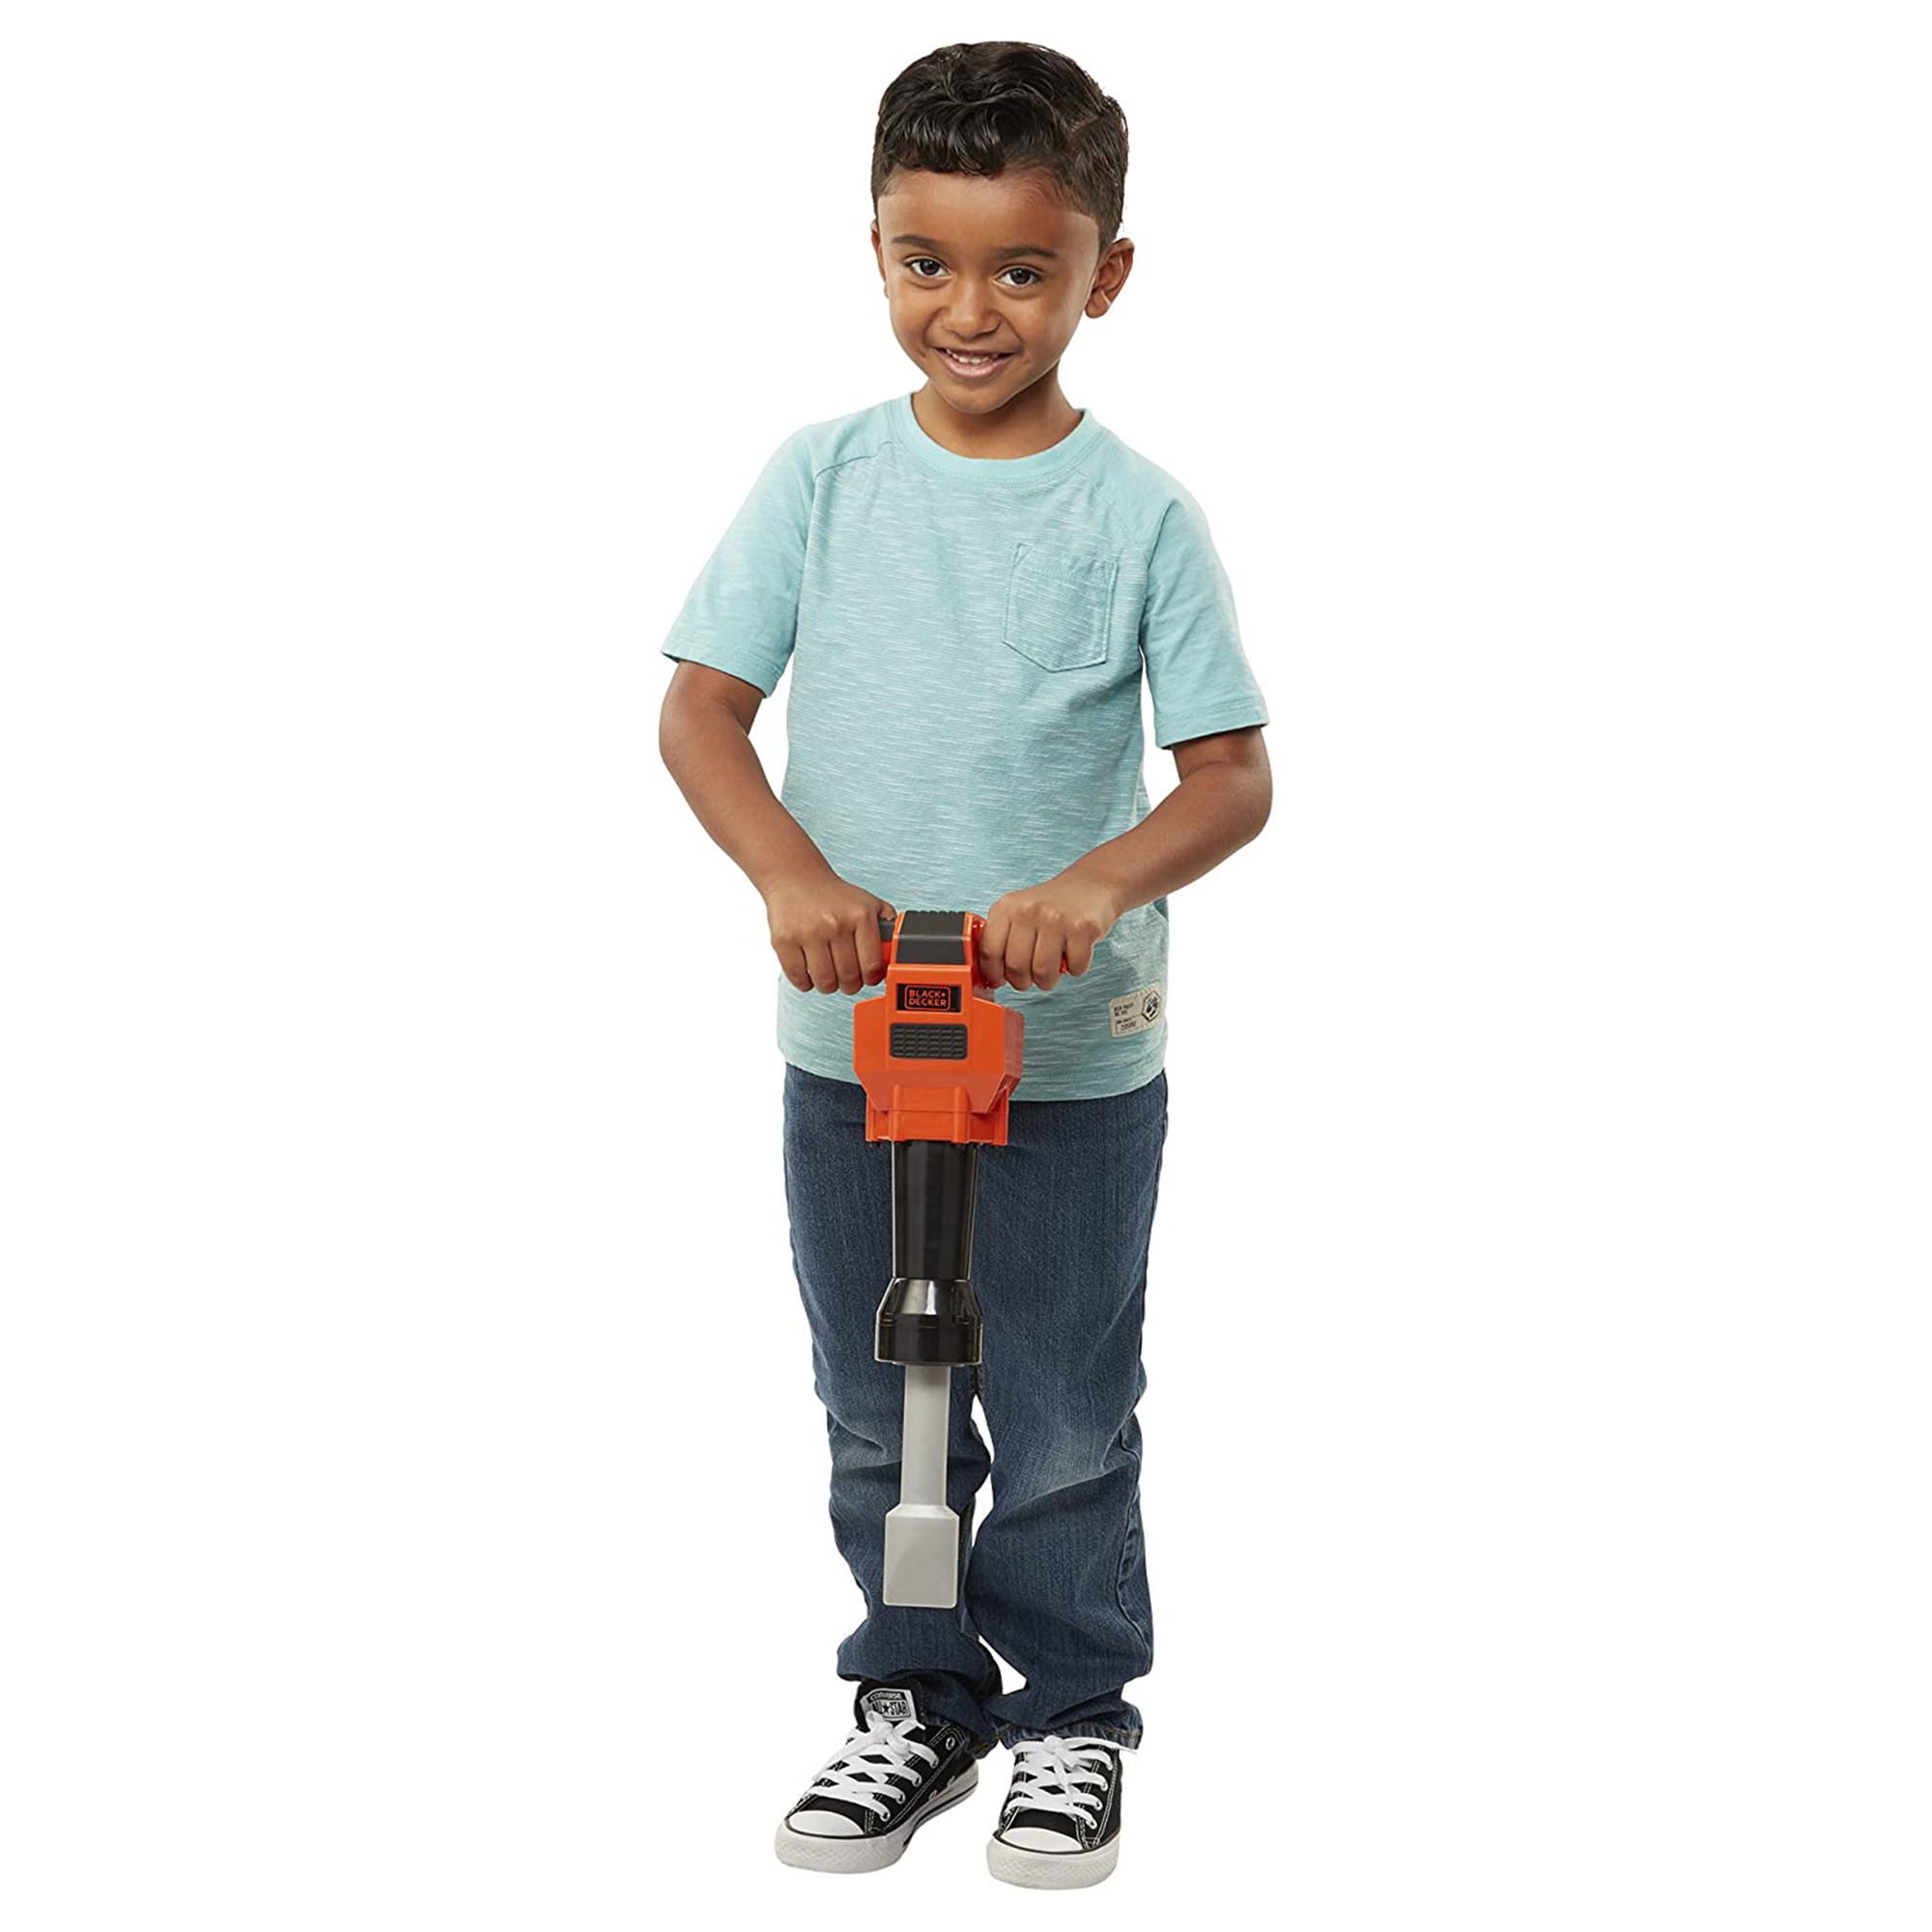 Junior Reciprocating Saw Power Tool - JAKKS Pacific, Inc.